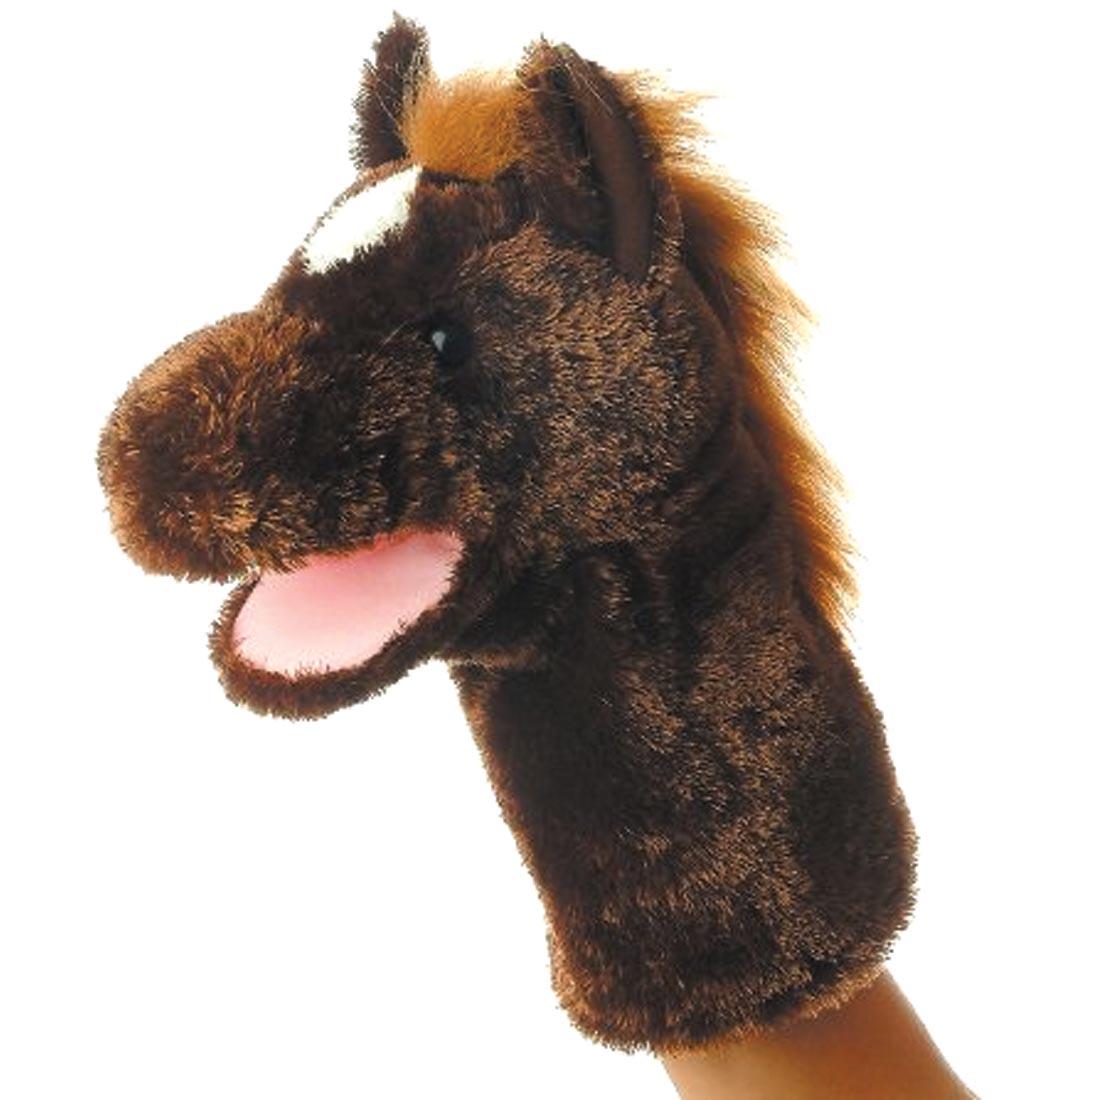 brown horse puppet